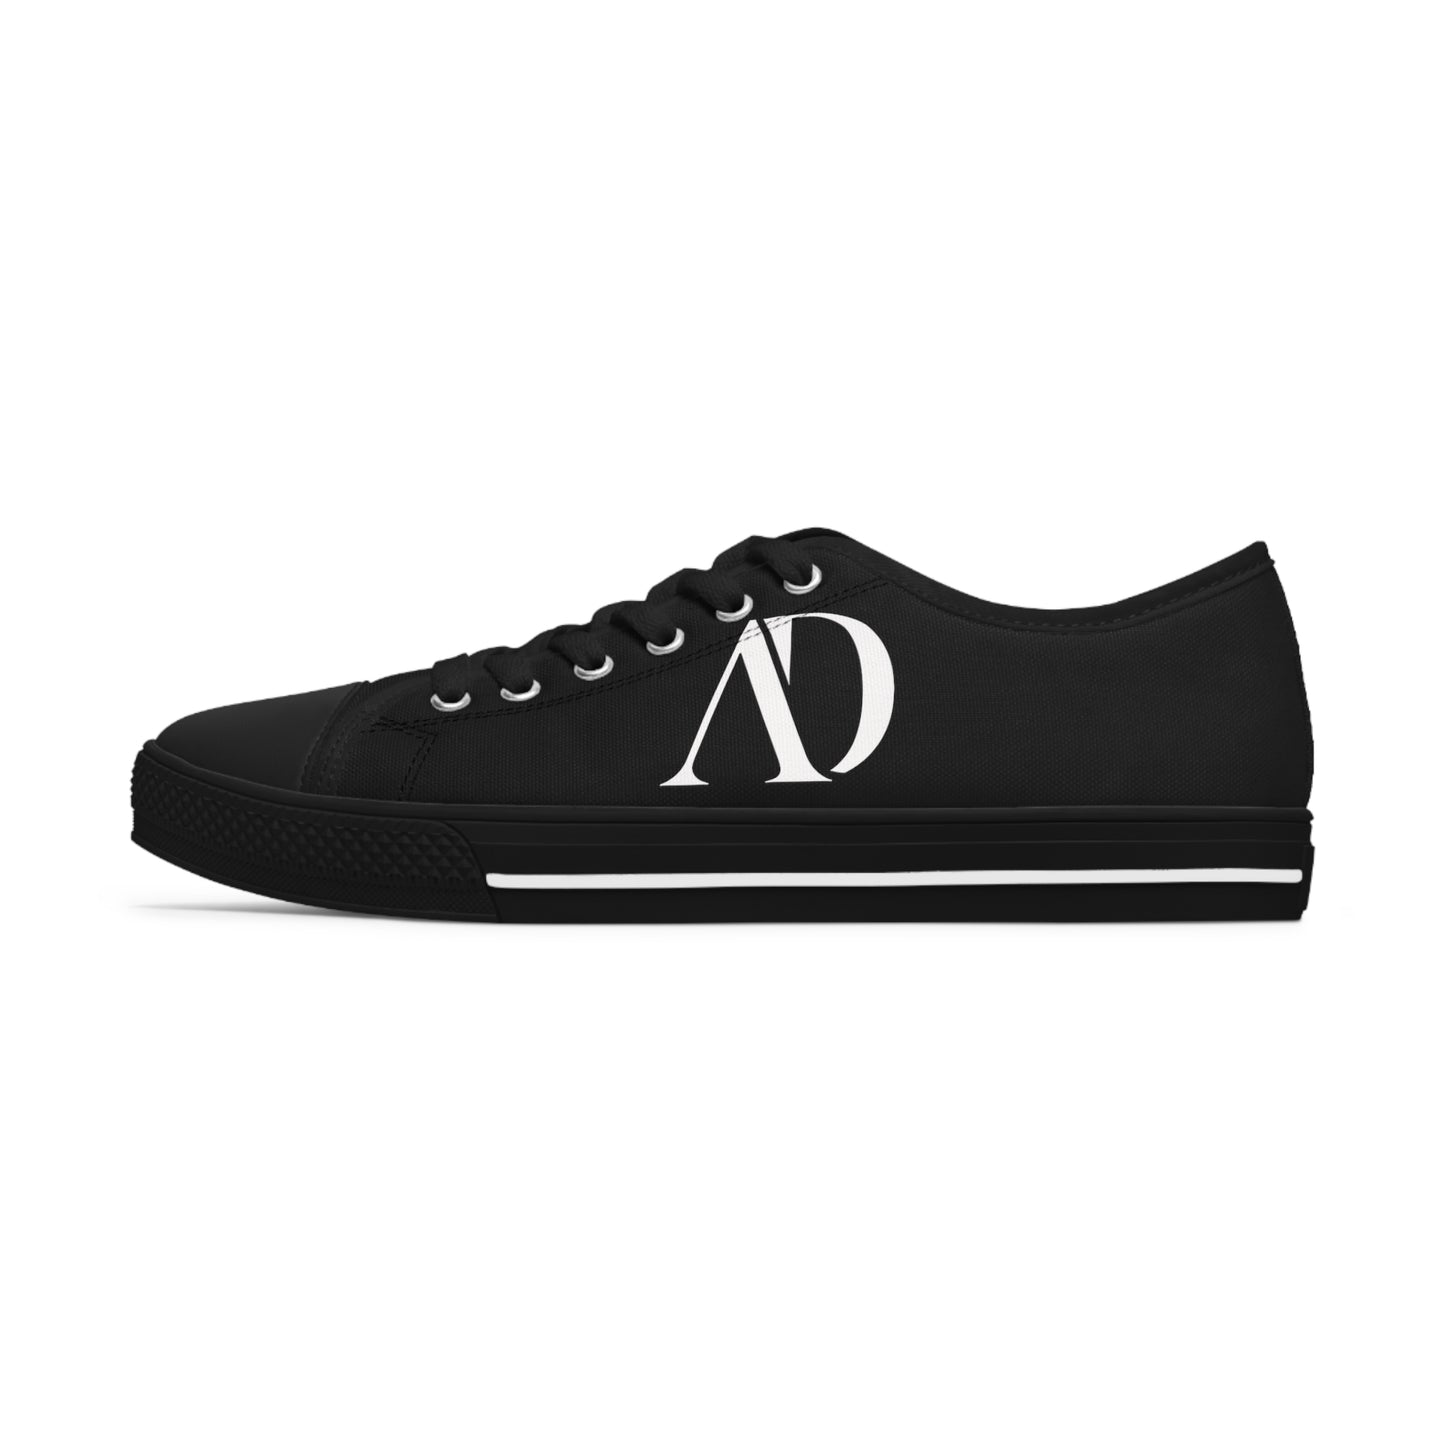 DeCrypt De Classic™ Black on Black Low Top Sneakers For Women